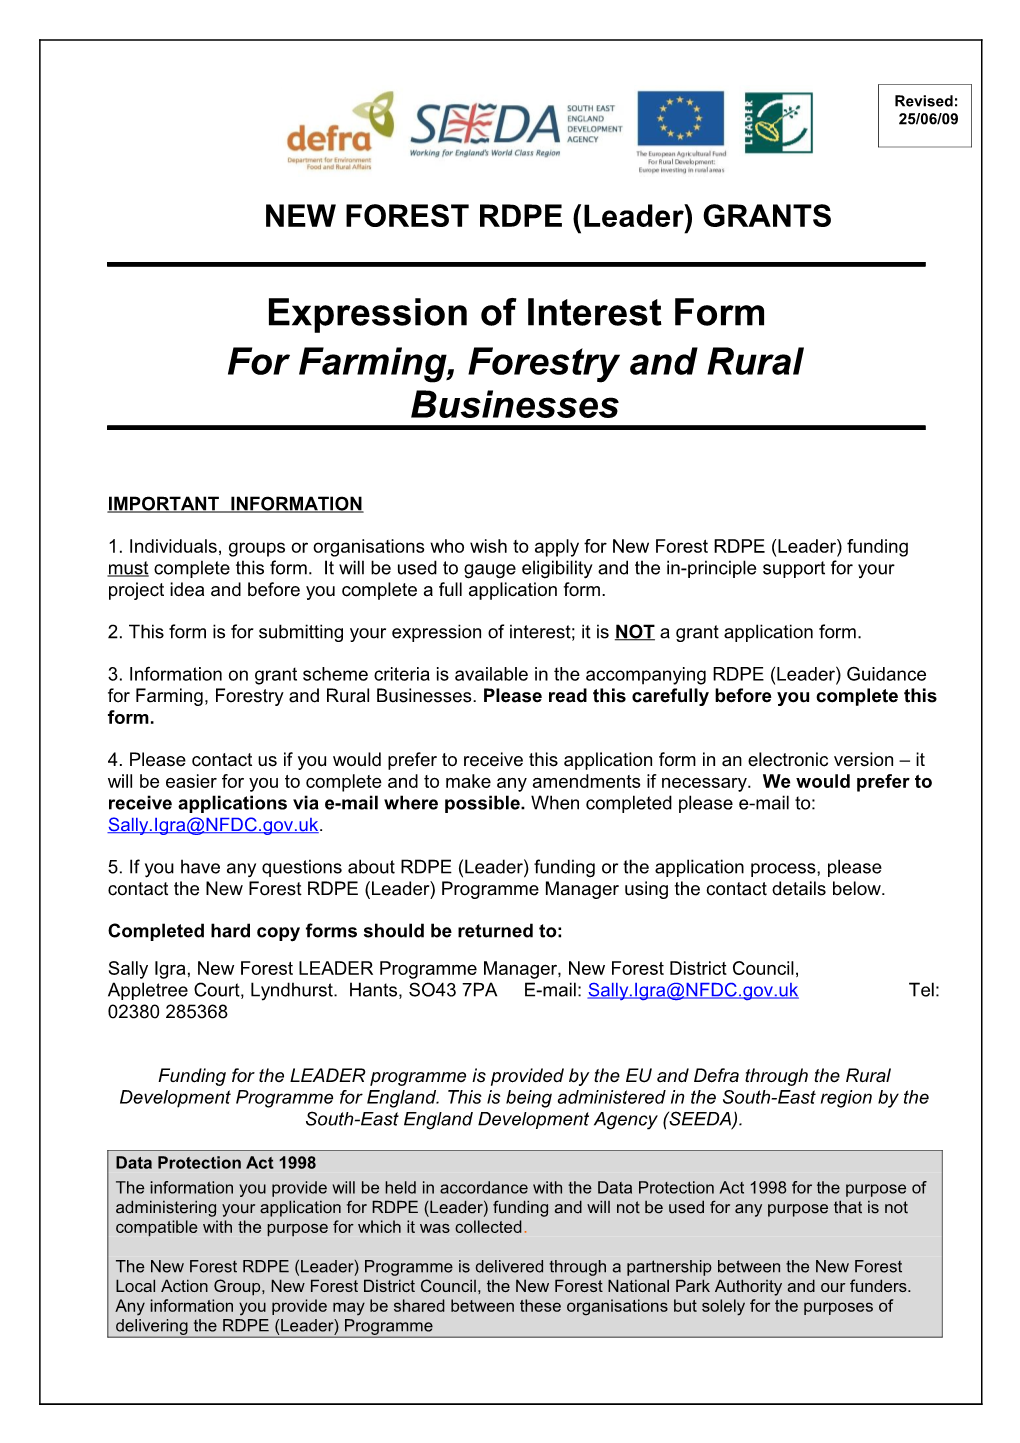 Rural Development Programme for England - Expression of Interest Form